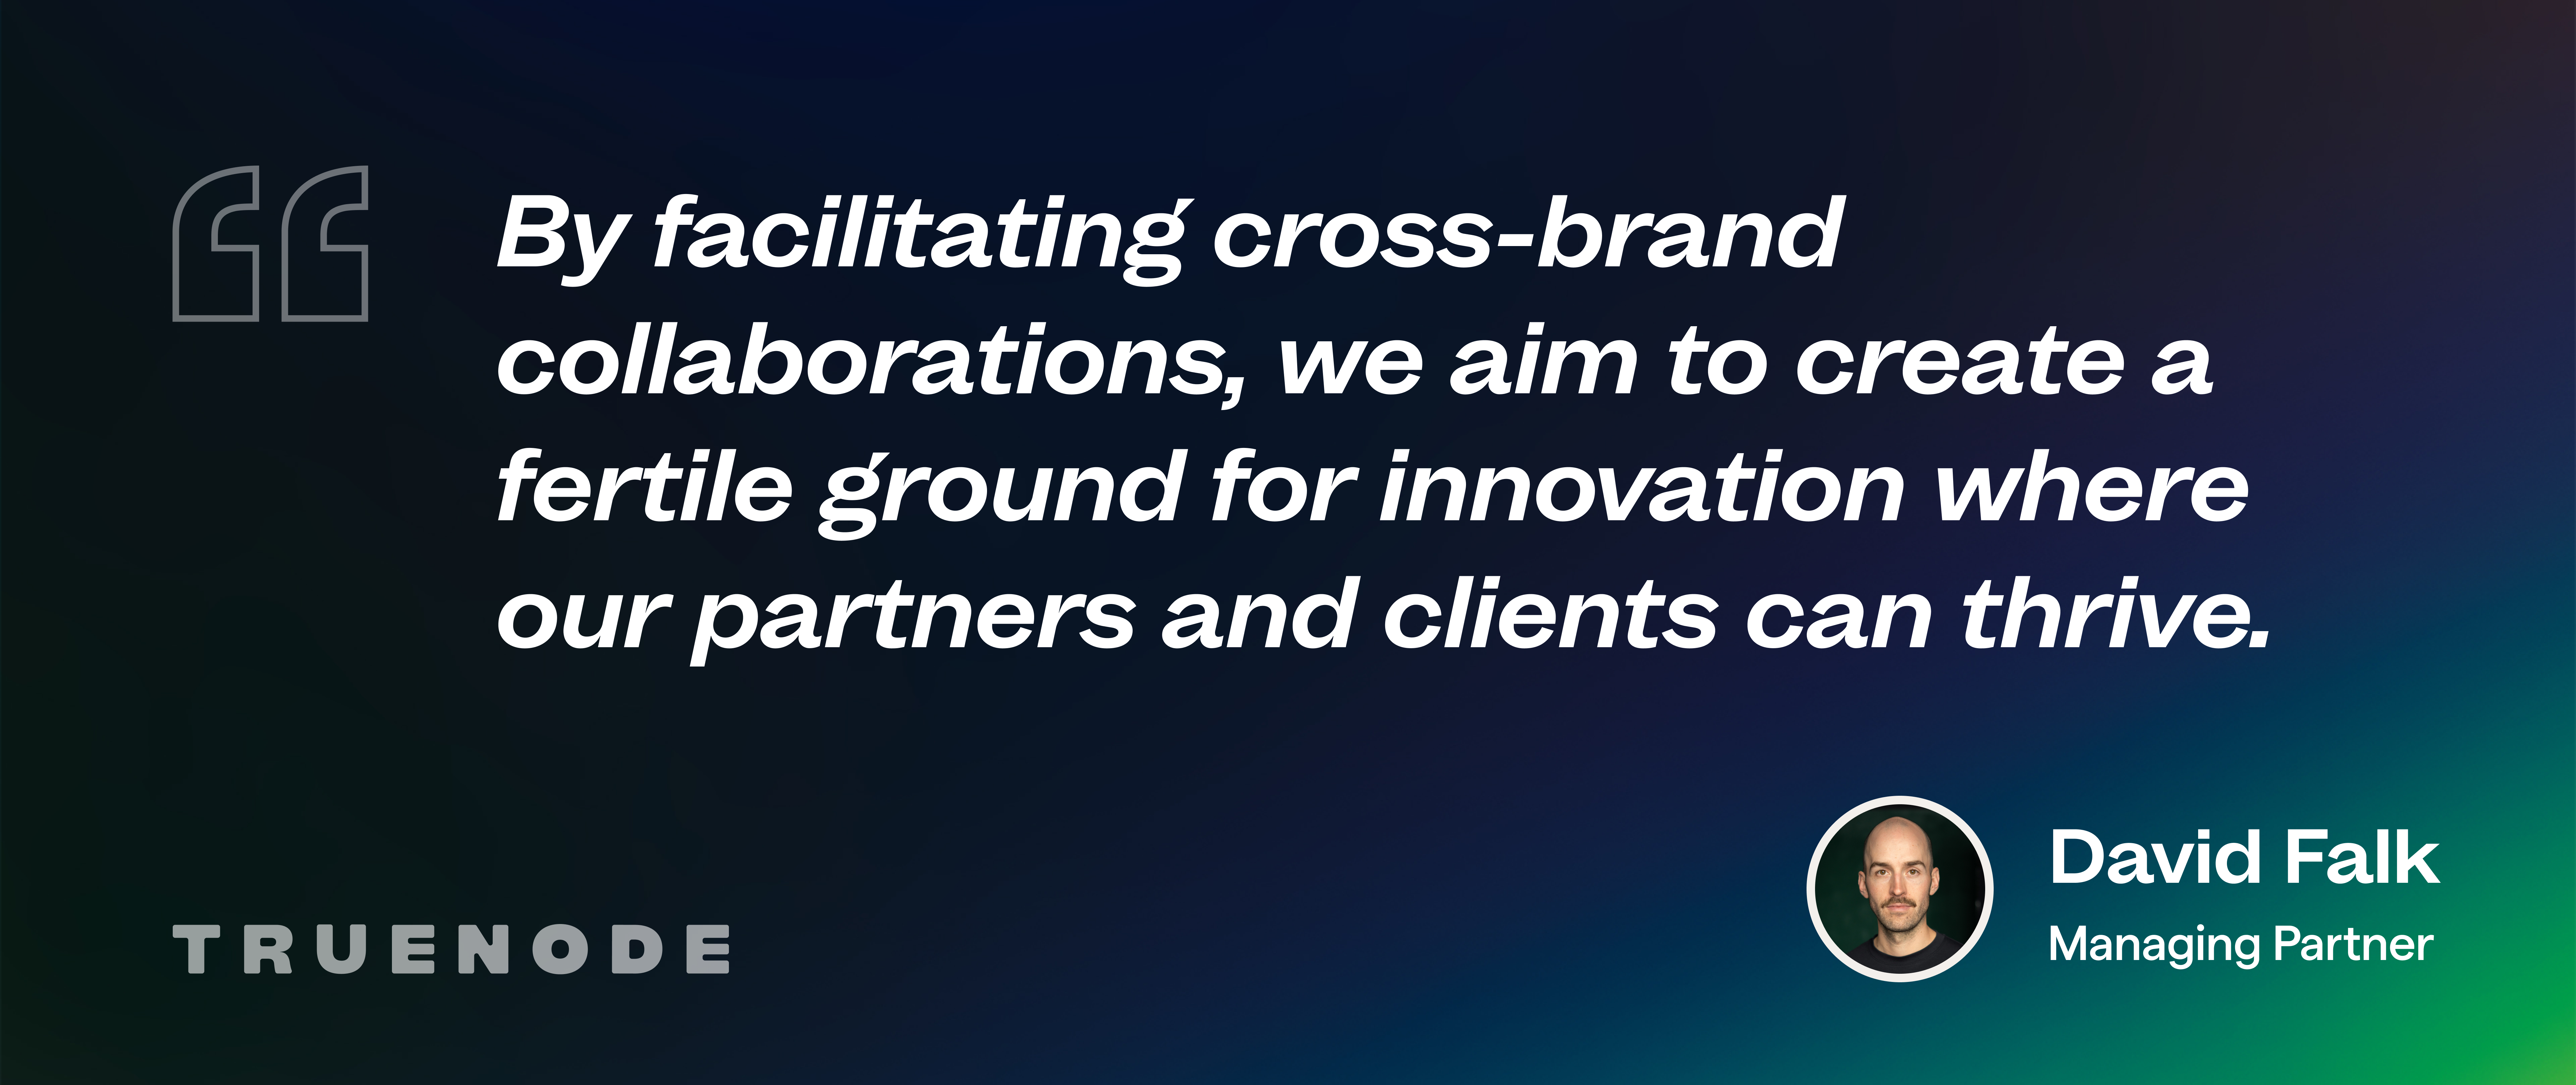 innovation through cross-brand collaboration